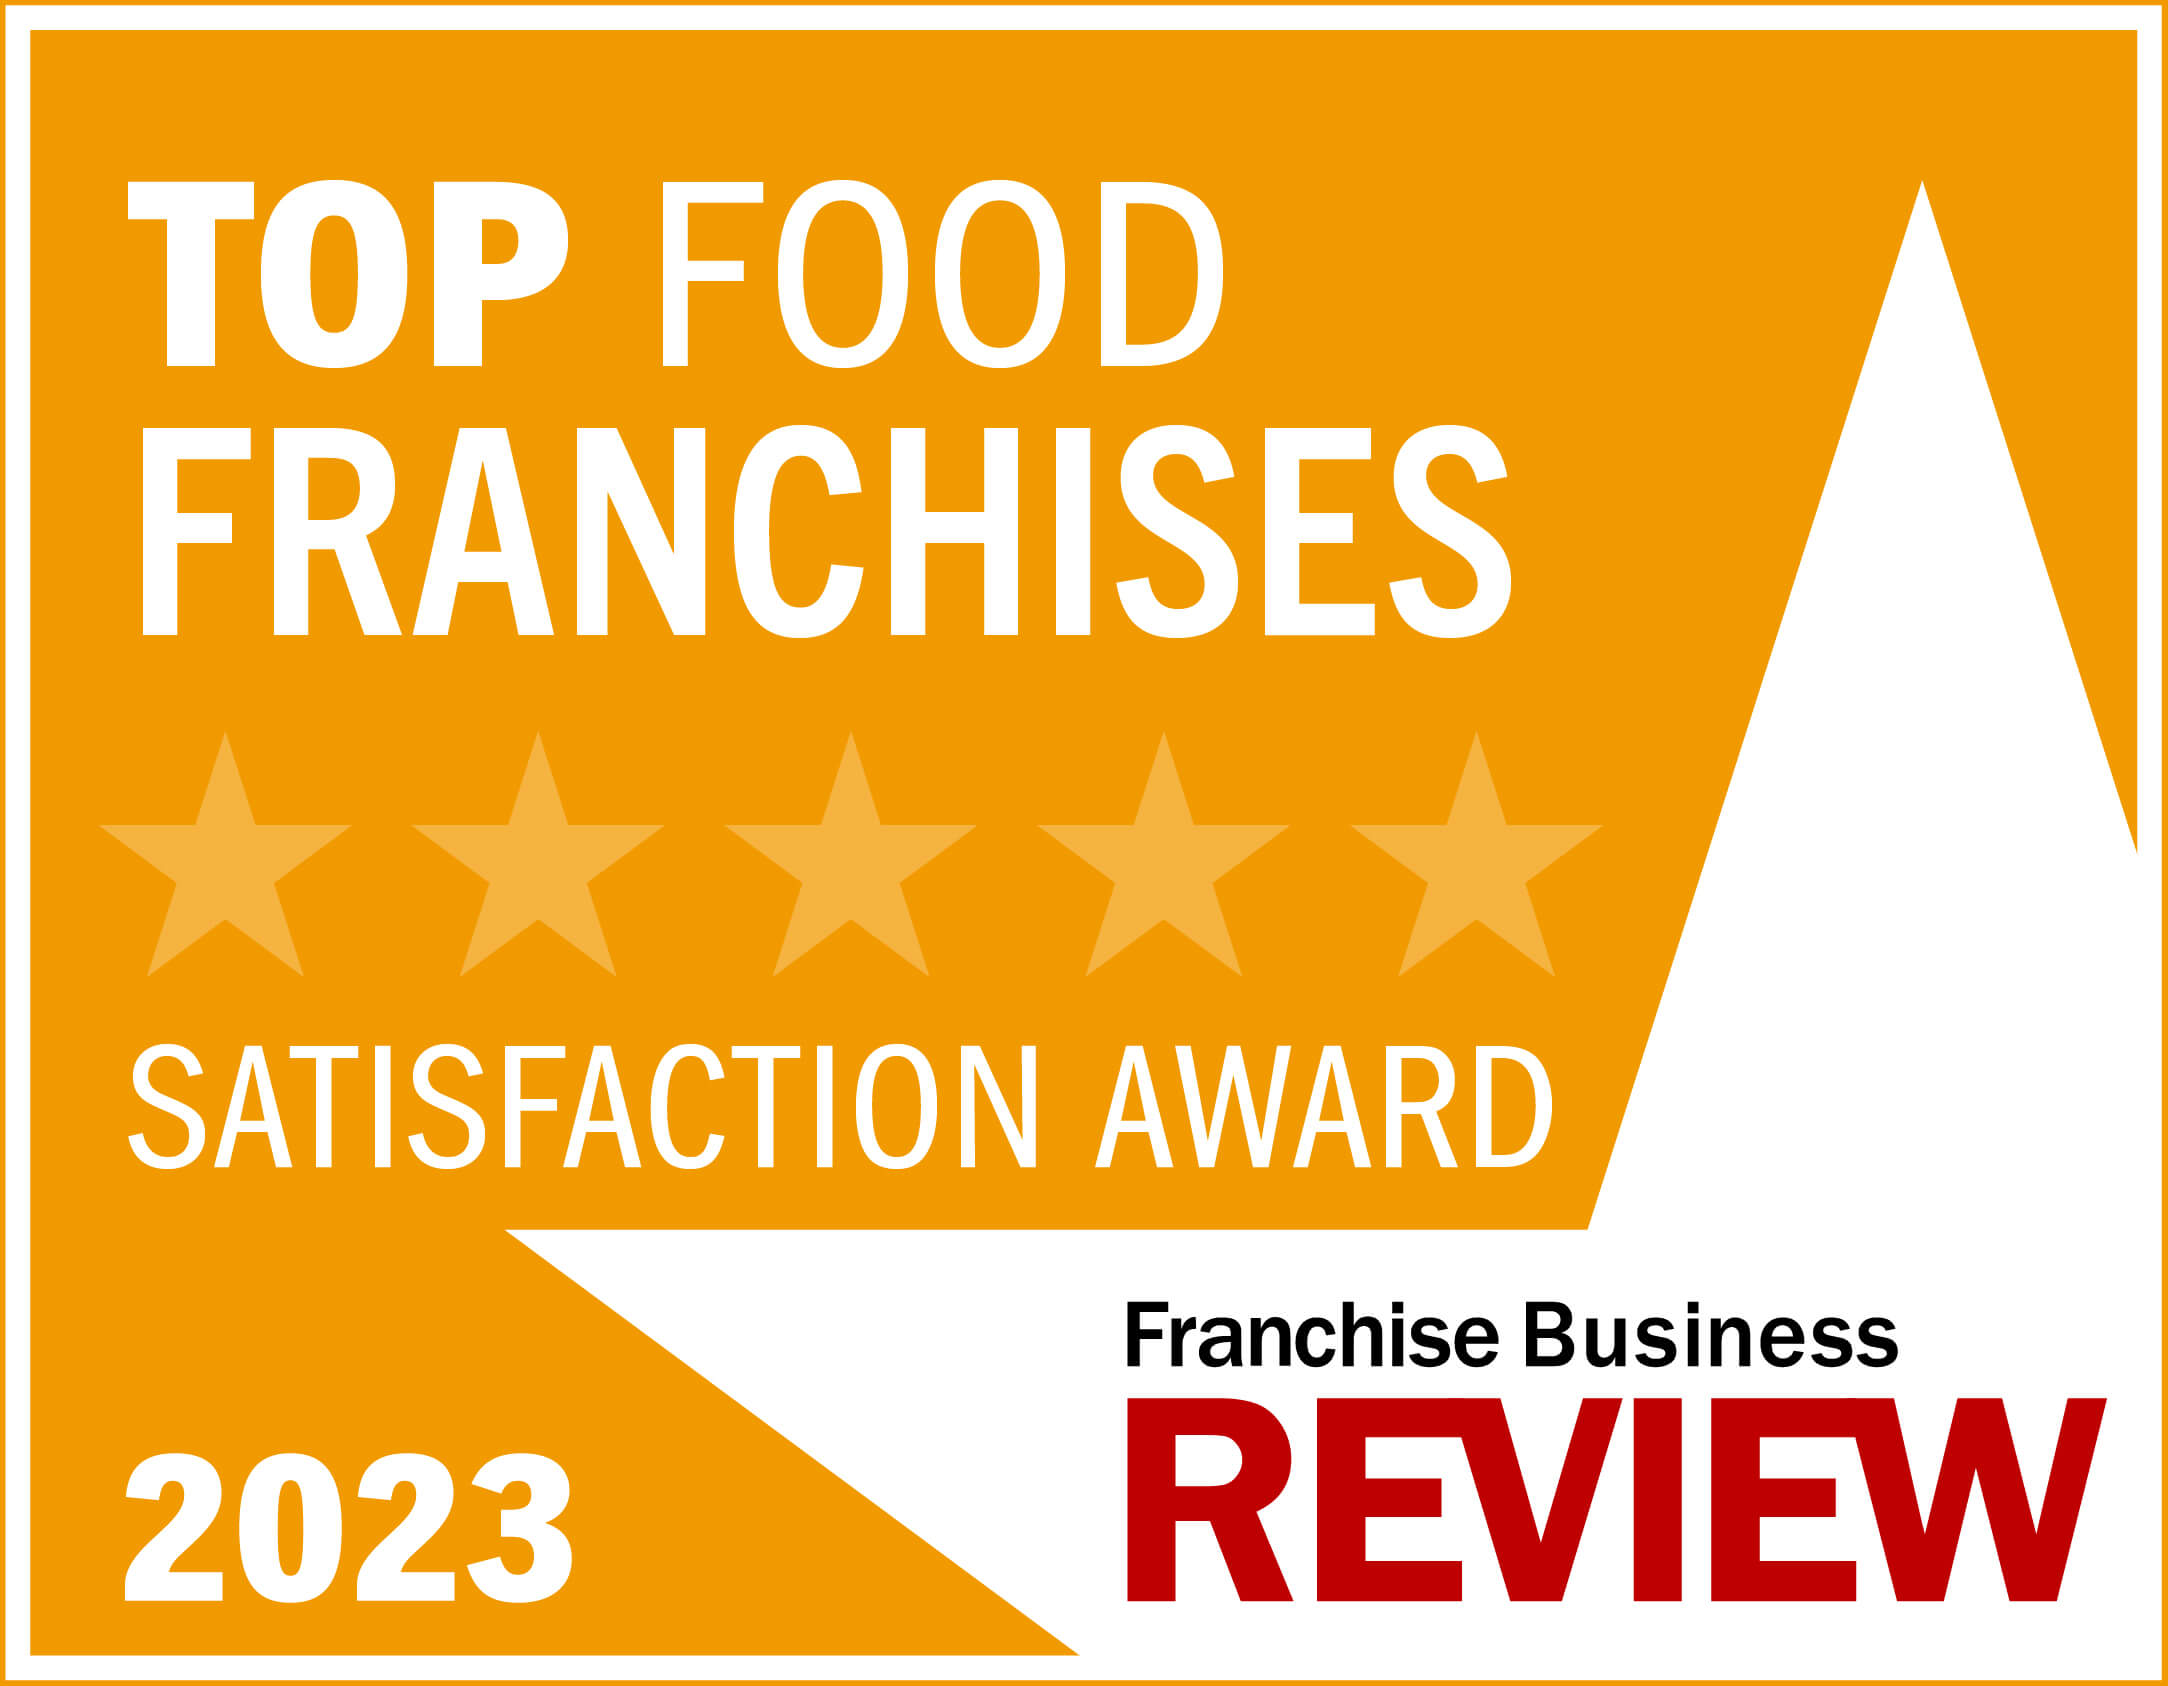 Franchise Business Review Top Food Franchises 2023 Award Winner